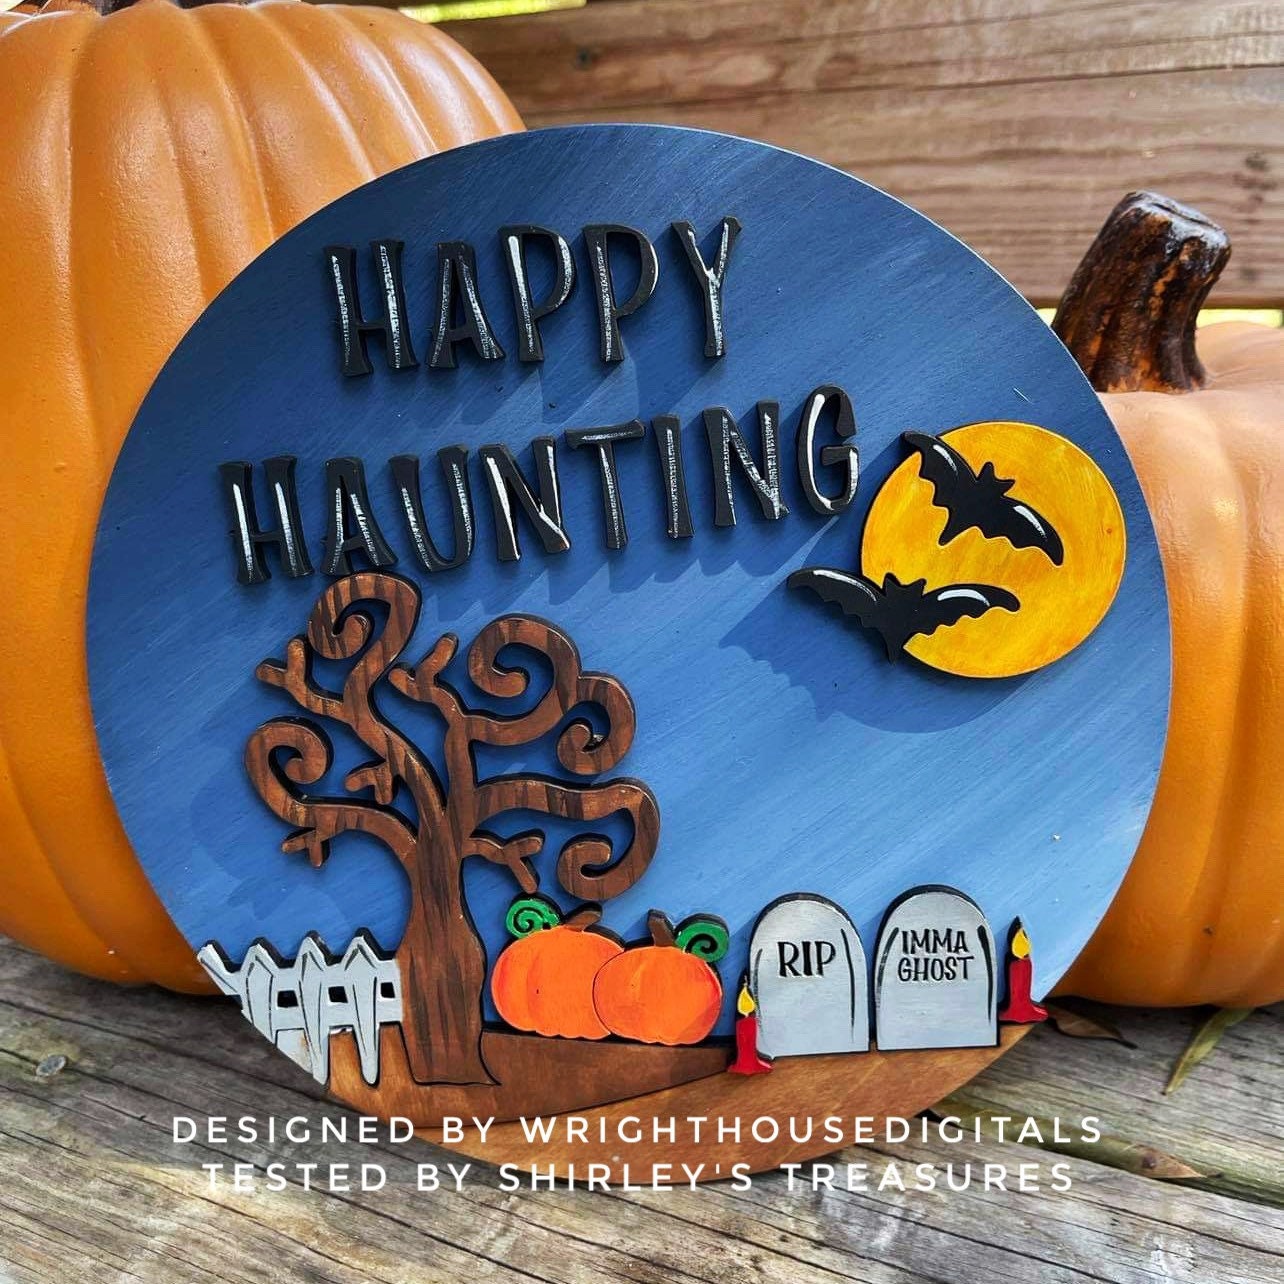 Happy Haunting Graveyard Halloween Door Hanger Round - Seasonal Sign Making and DIY Kits - Cut File For Glowforge Lasers - Digital SVG File